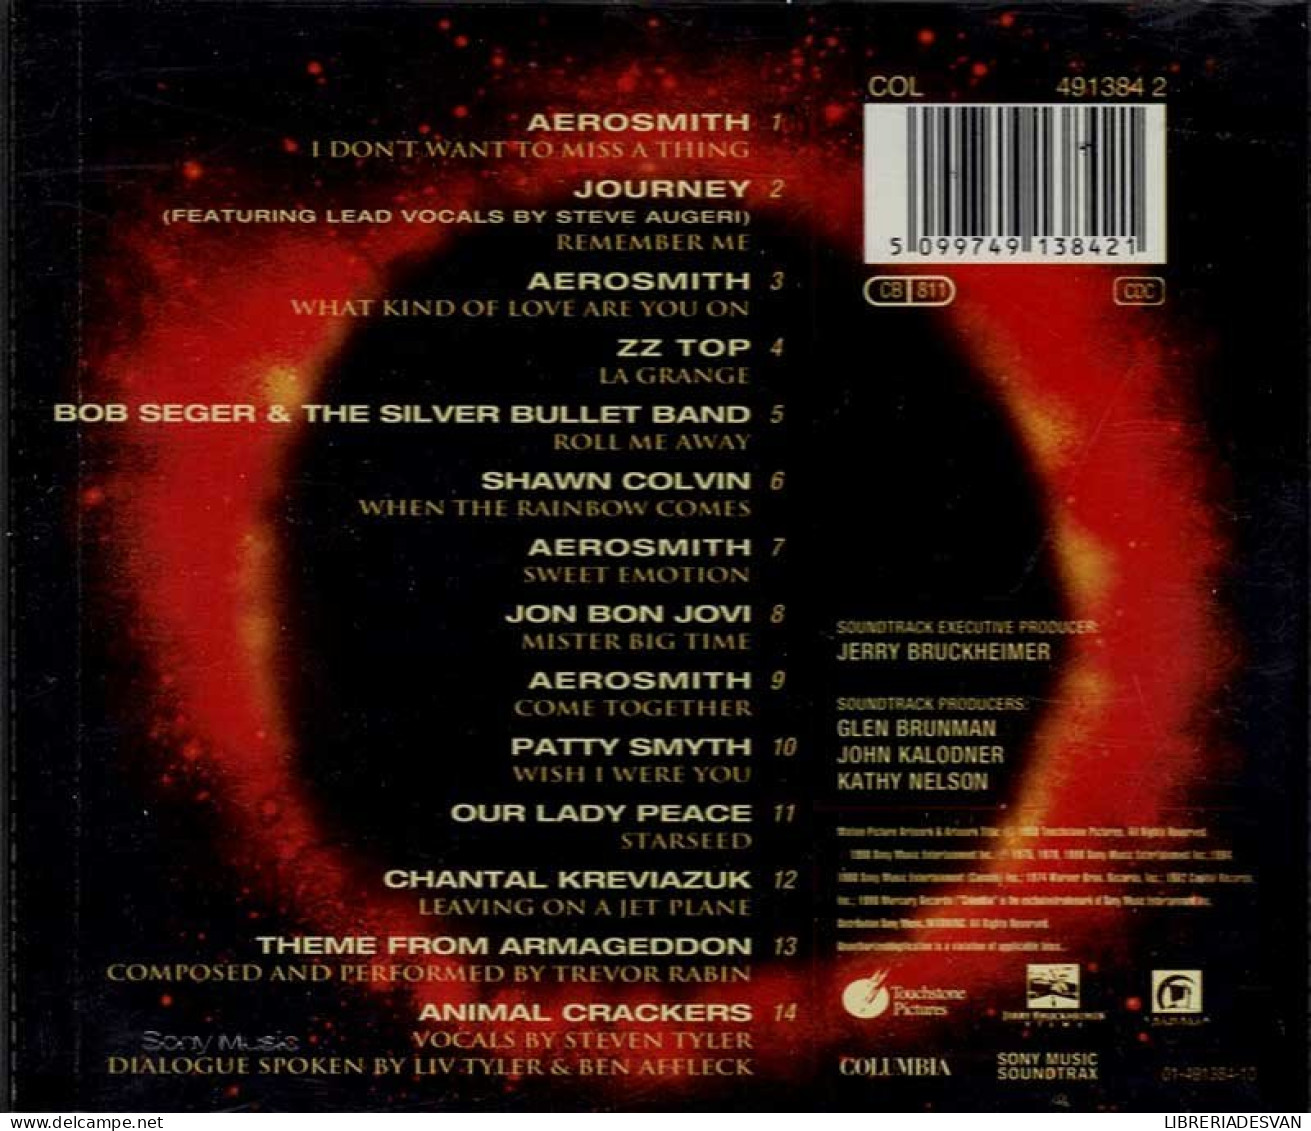 Armageddon - The Album (BSO). CD - Musica Di Film